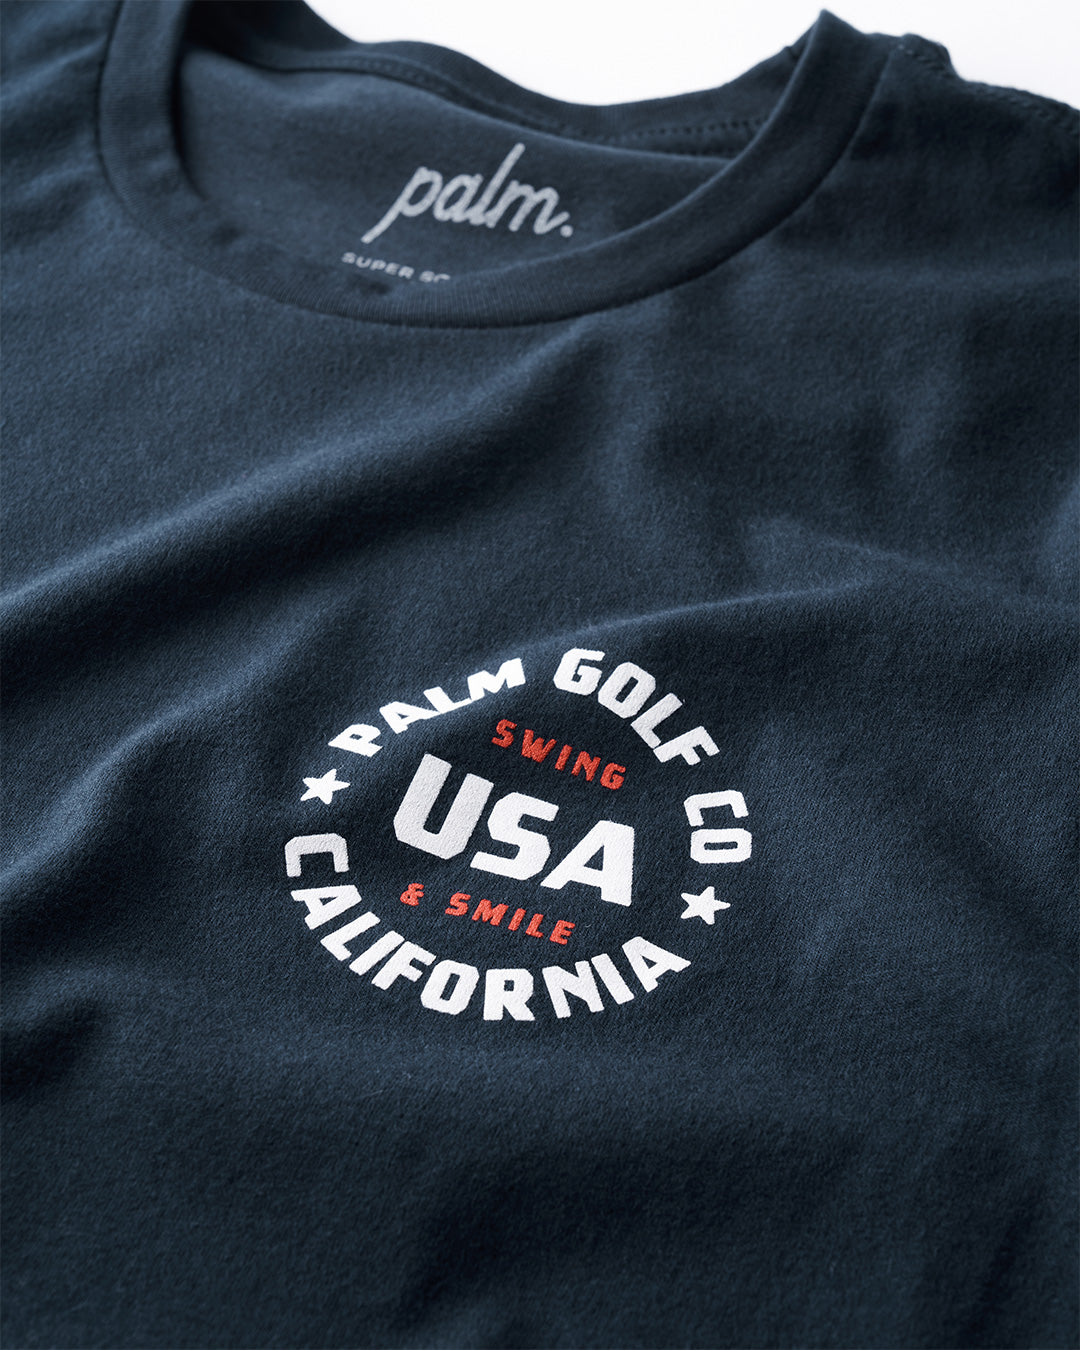 Union T-Shirt - Palm Golf Co.